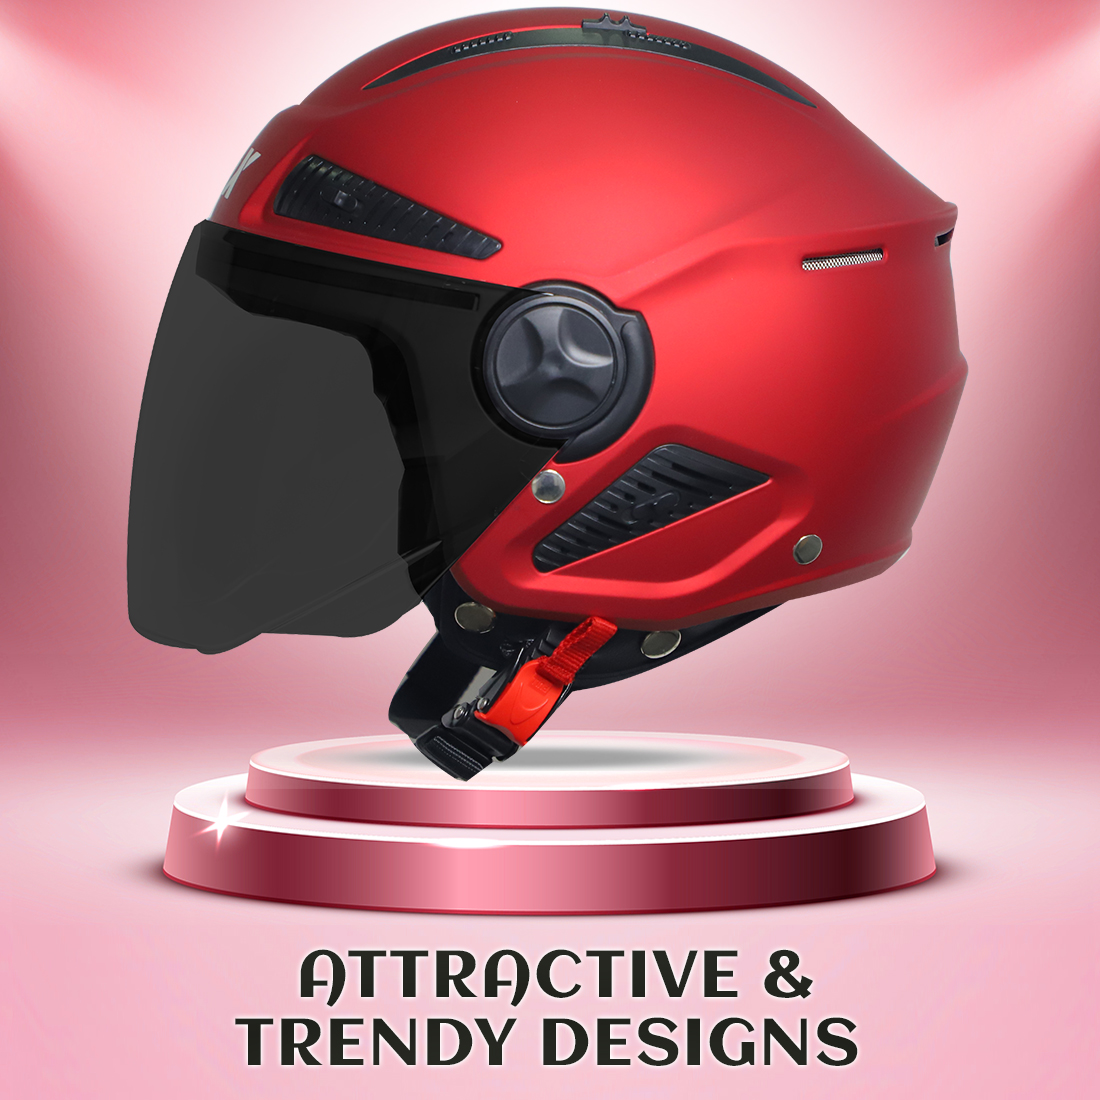 Steelbird SBH-24 Boxx ISI Certified Open Face Helmet For Men And Women (Matt Cherry Red With Smoke Visor)